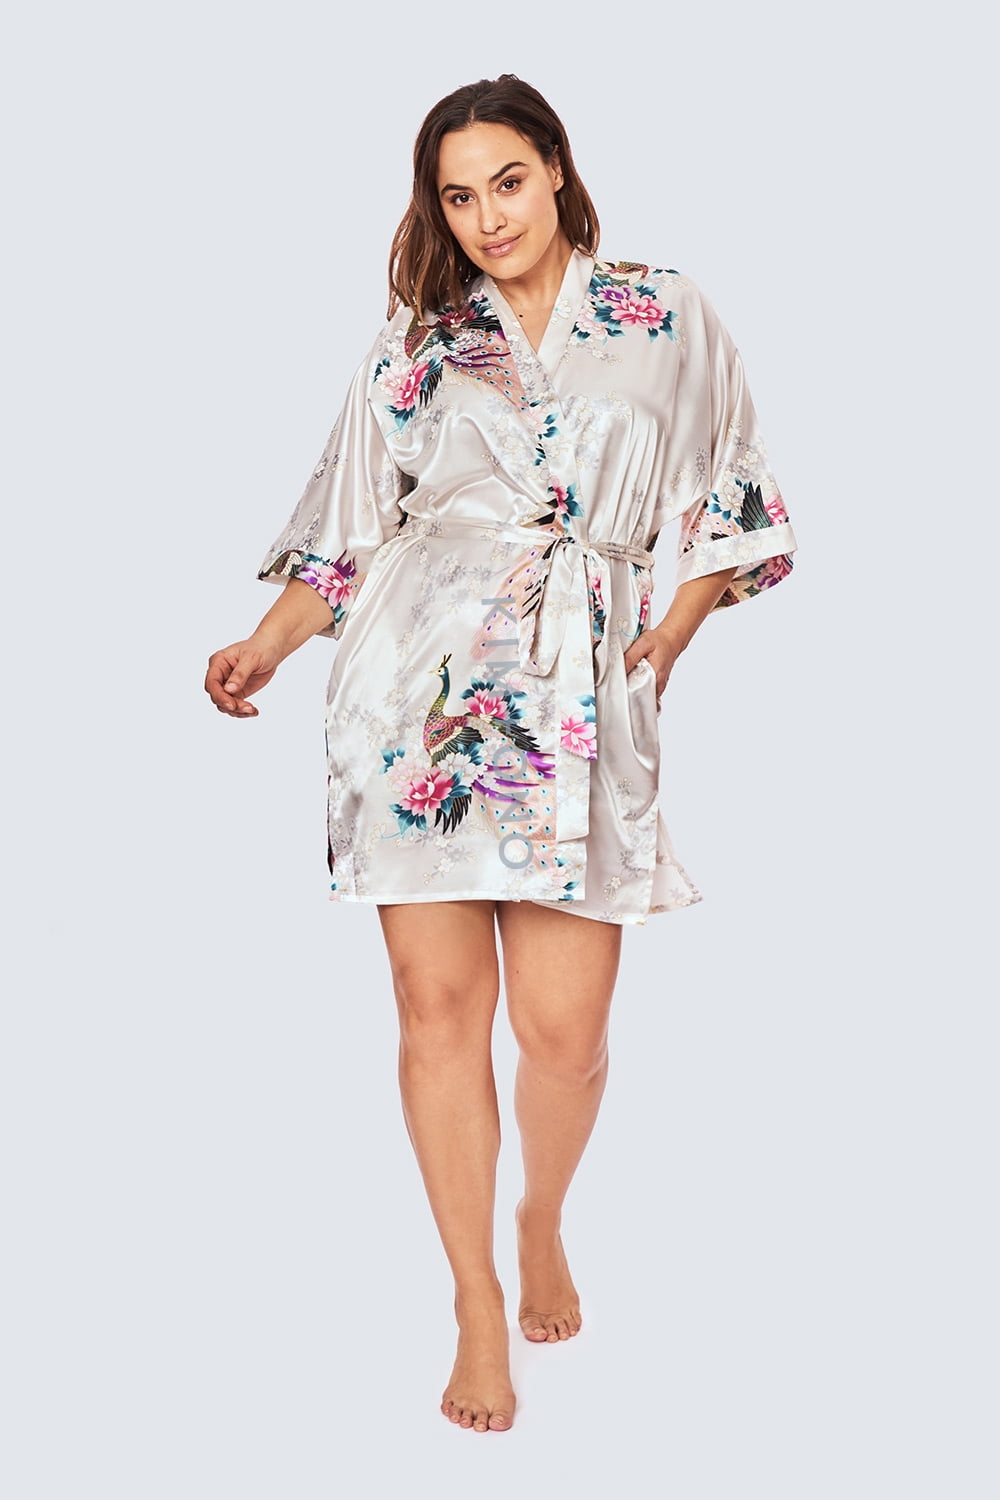 Loose Chinese Silk Women Kimono Robe Gown Bathrobe Sleepwear Plus Size 10 Color